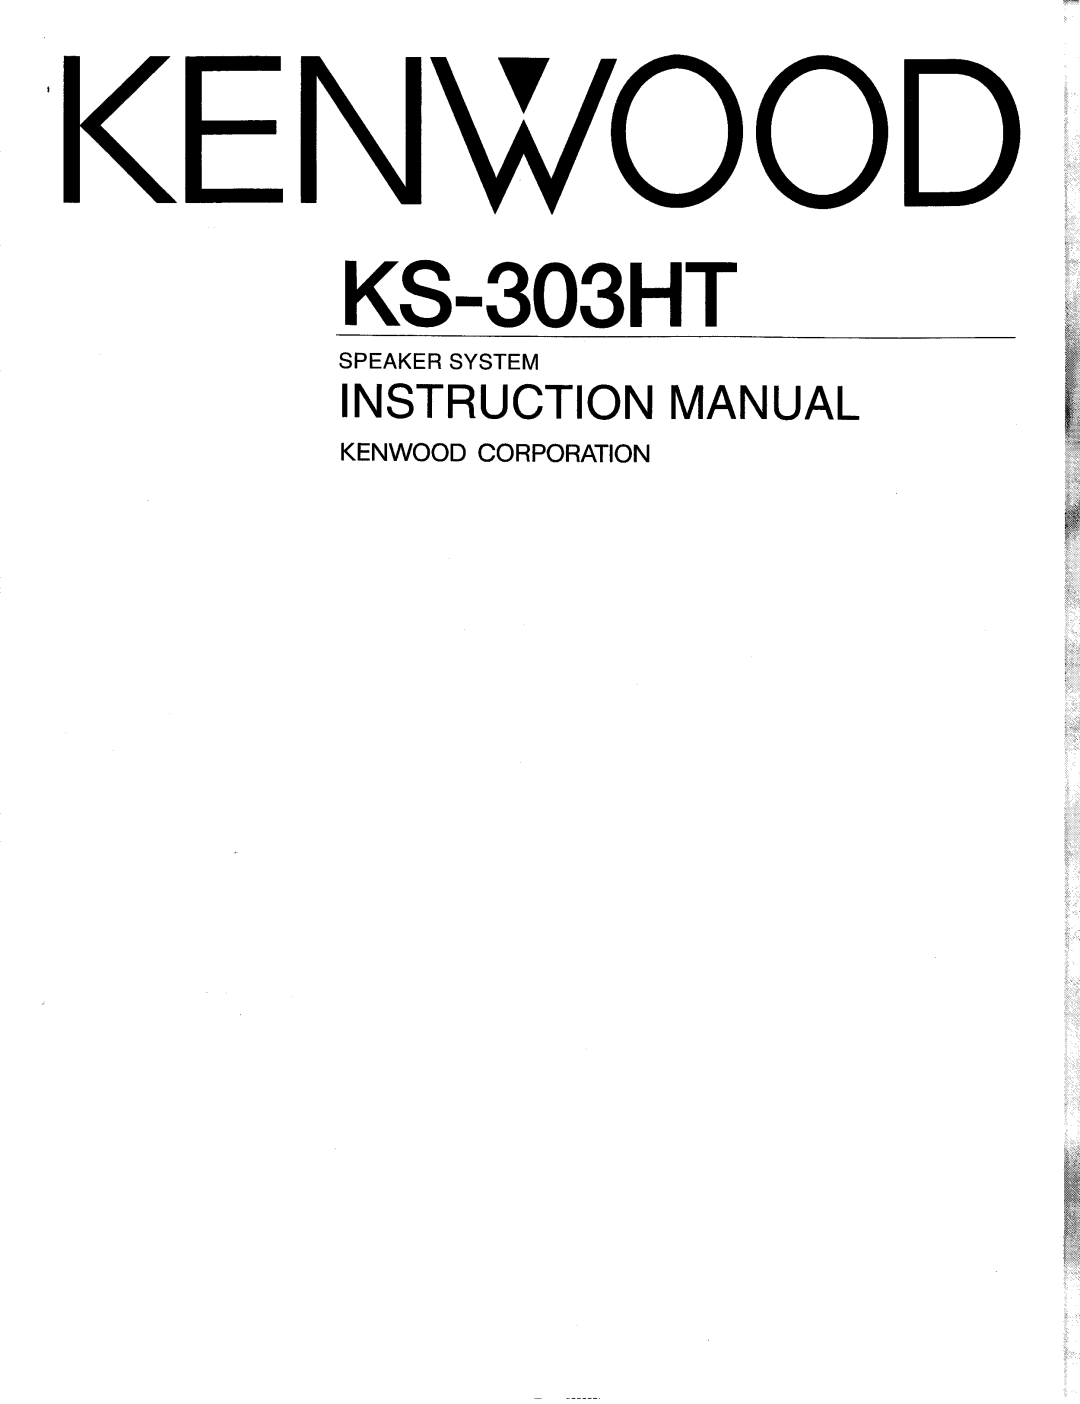 Kenwood KS-303HT manual 